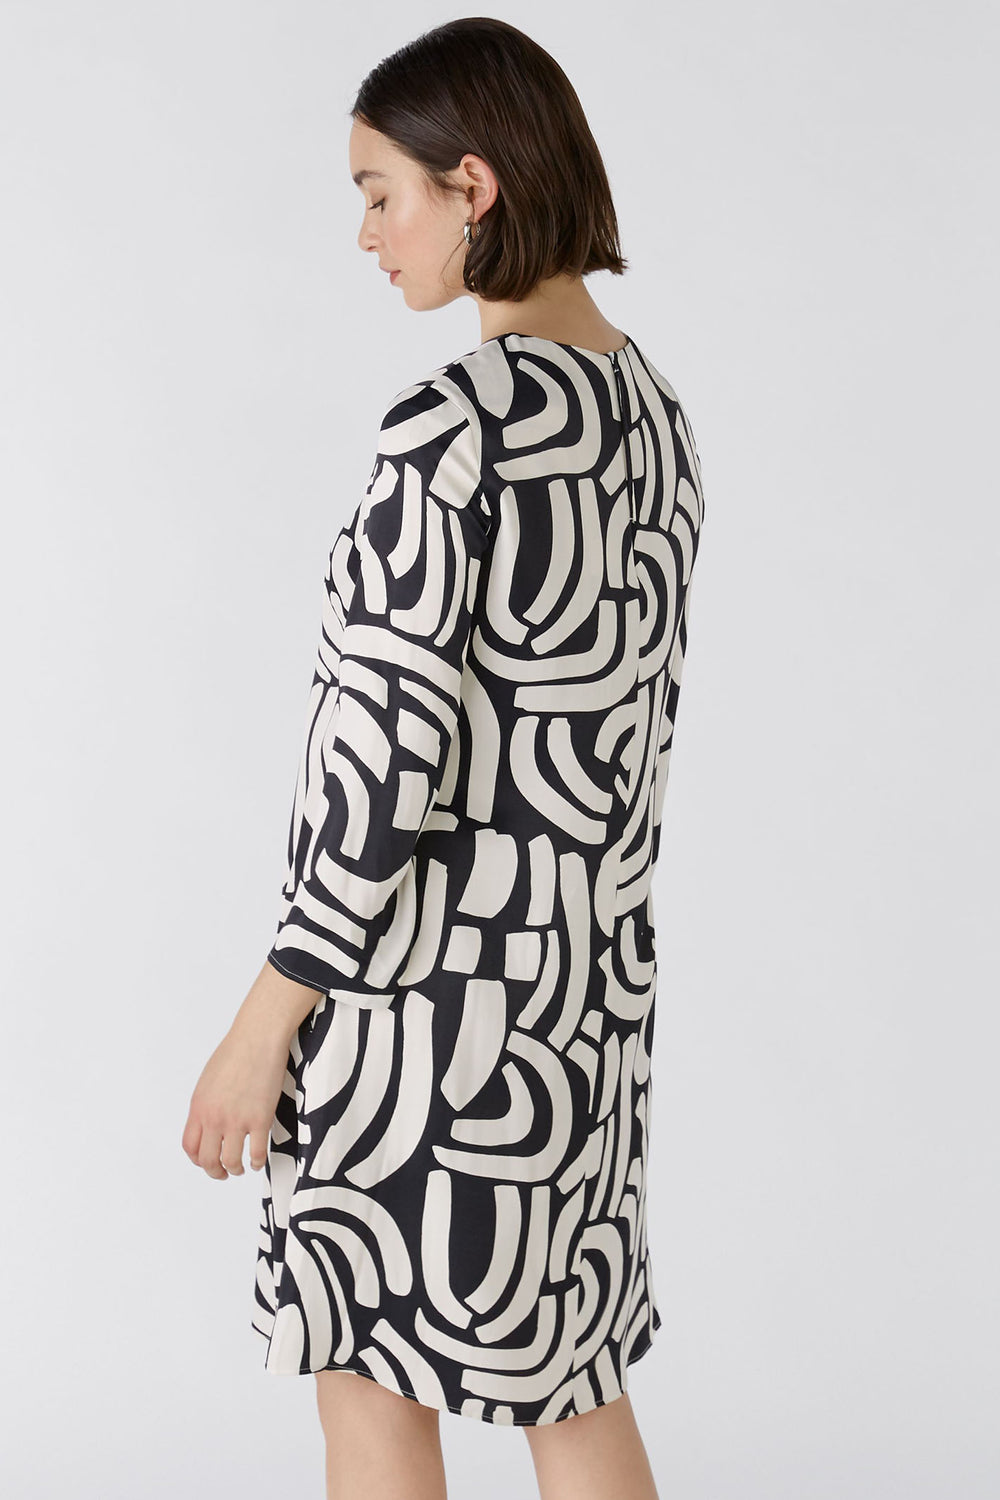 Oui 88272 Black Off White Abstarct Print Round Neck Dress - Olivia Grace Fashion